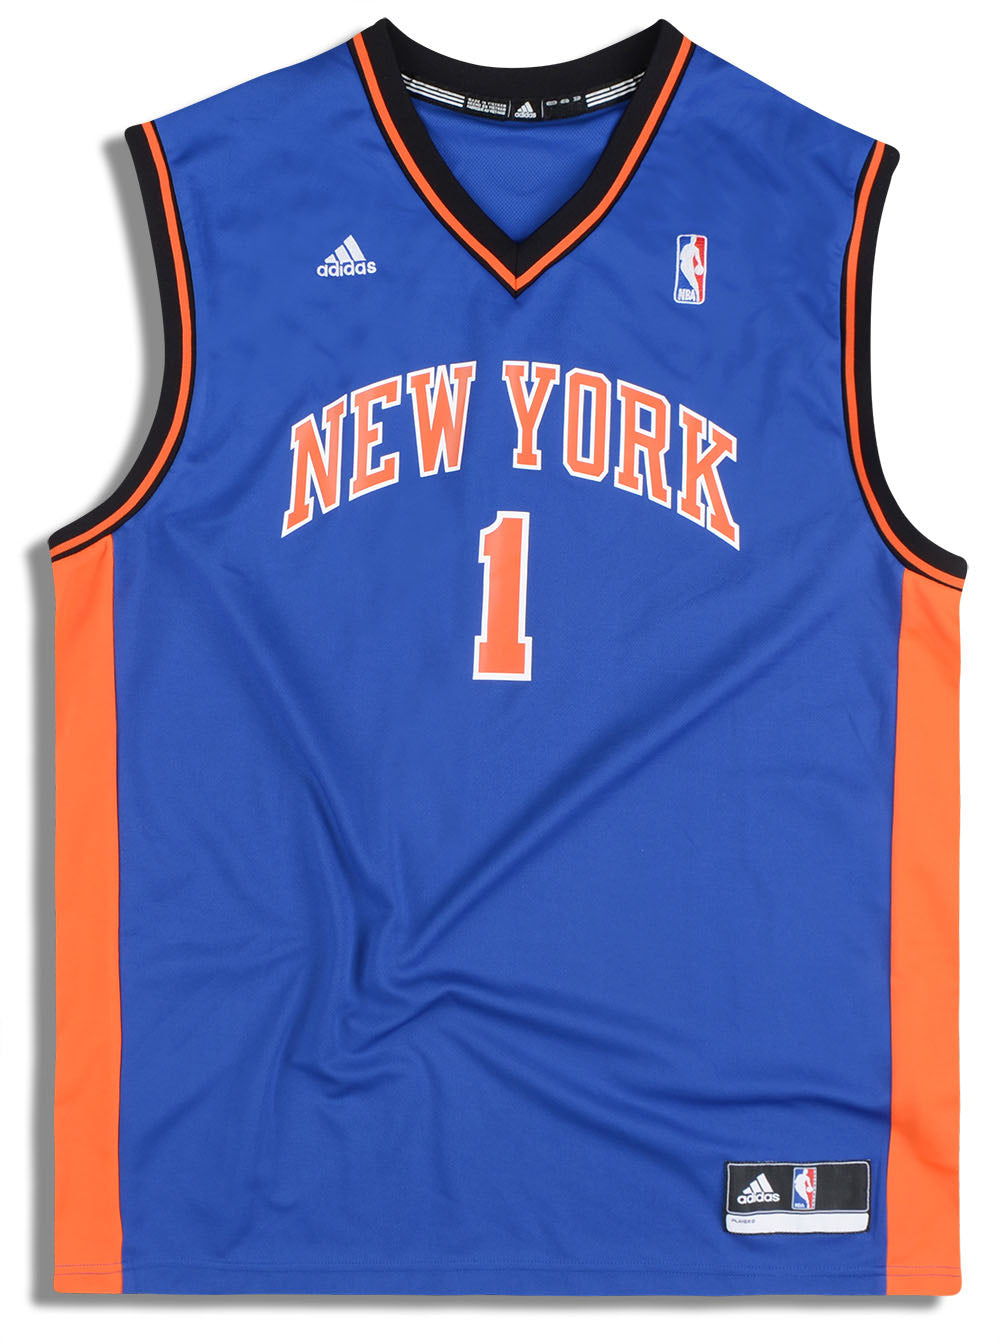 Amigo Jerseys on Instagram: “New York Knicks Statement Edition Temporada  2022-23 🥇Rowan Barrett🥇”